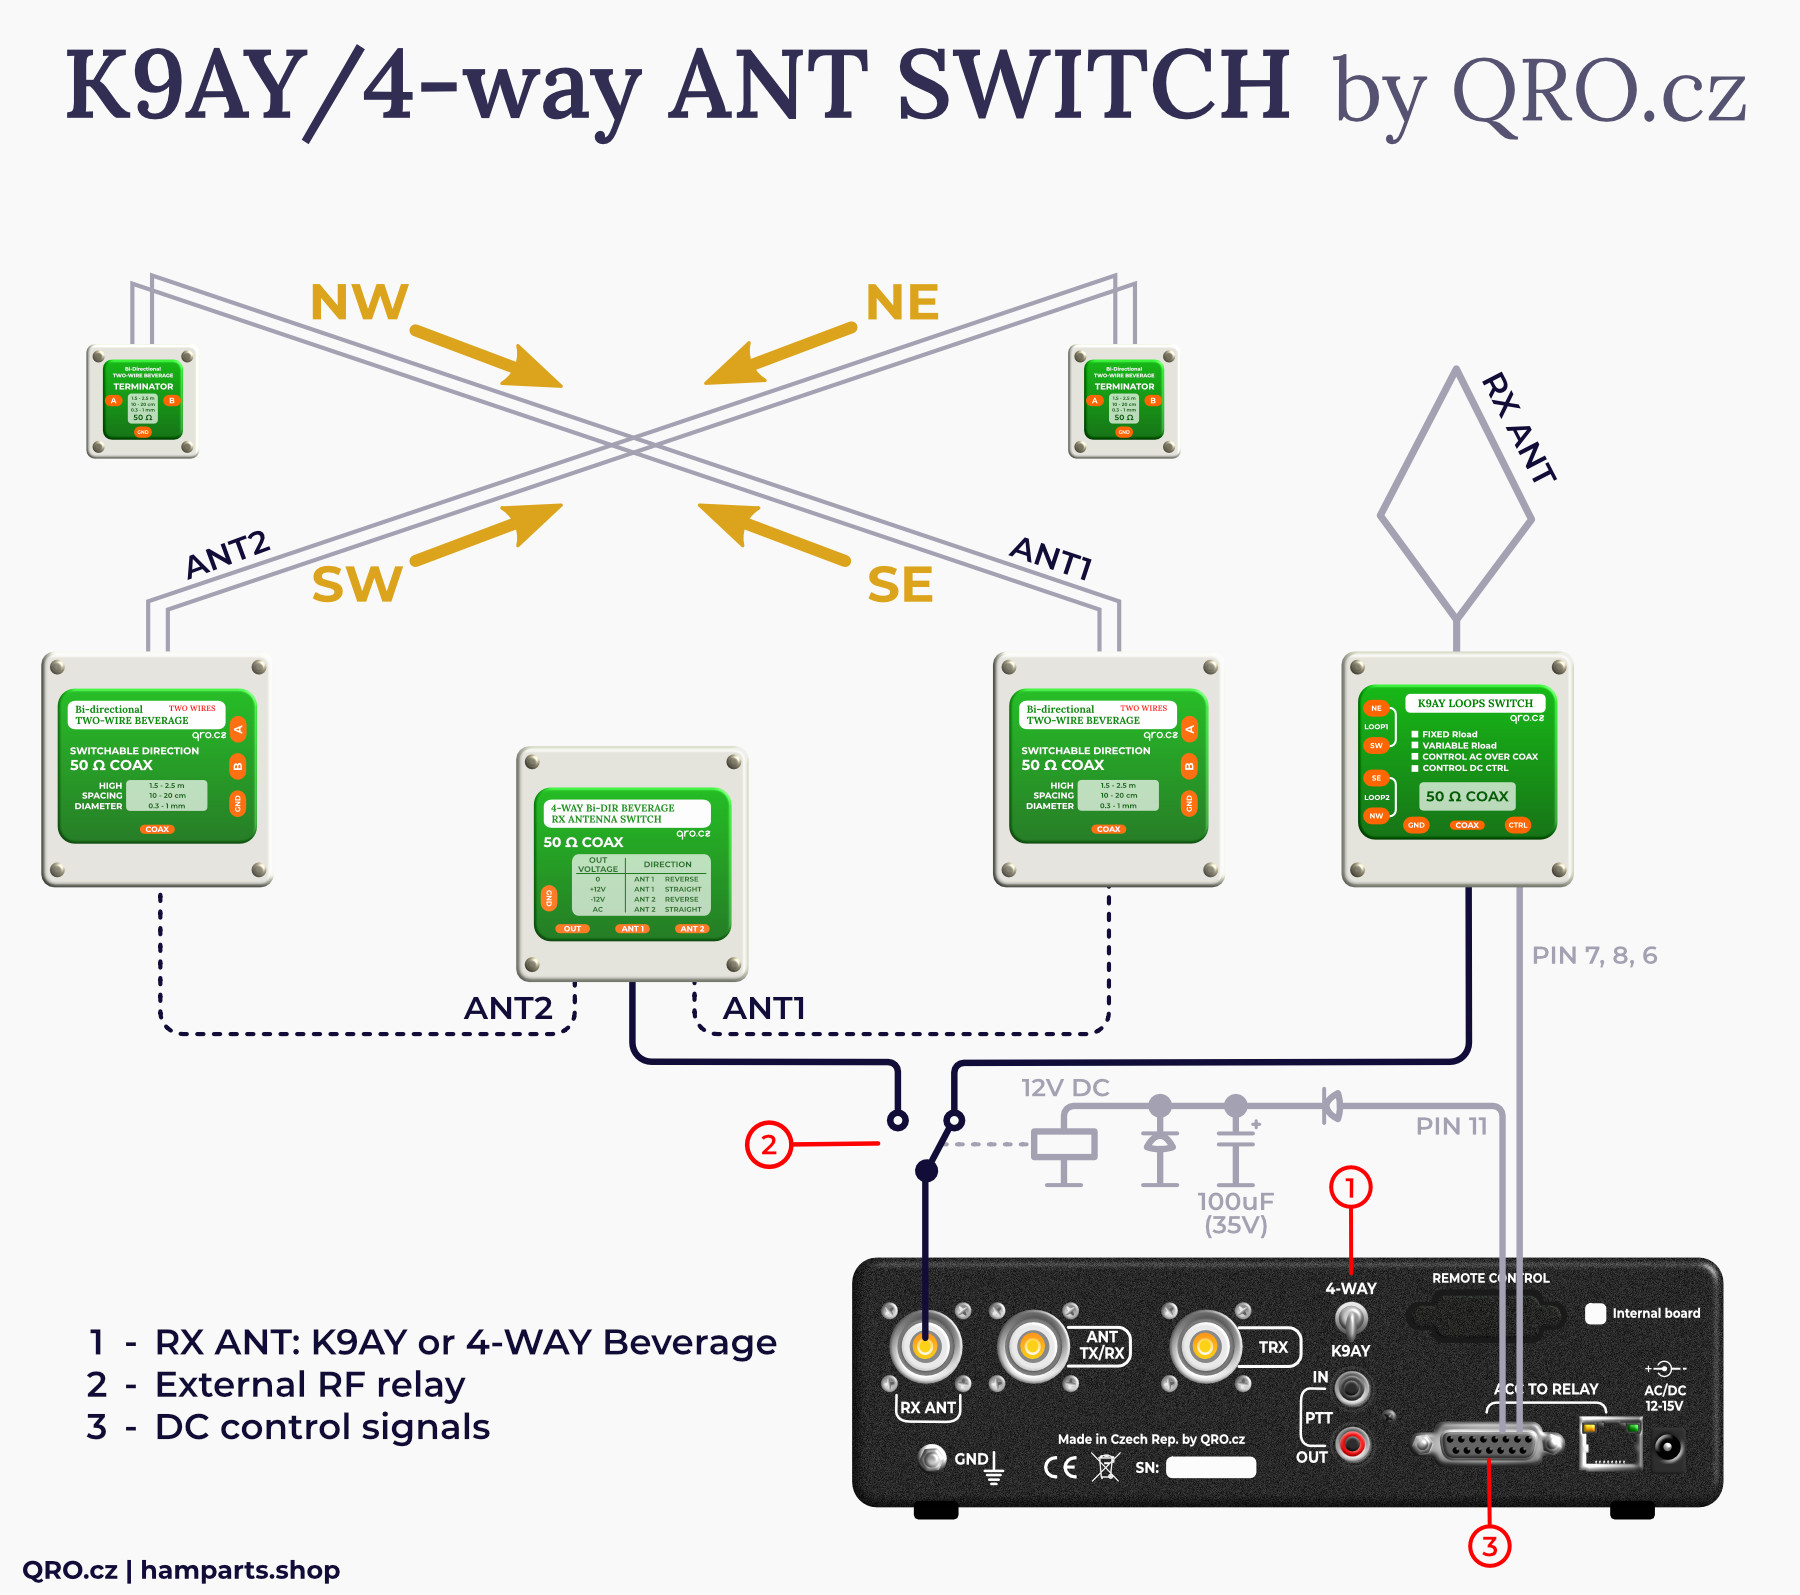 k9ay/4-way controller switching qro.cz hamparts.shop